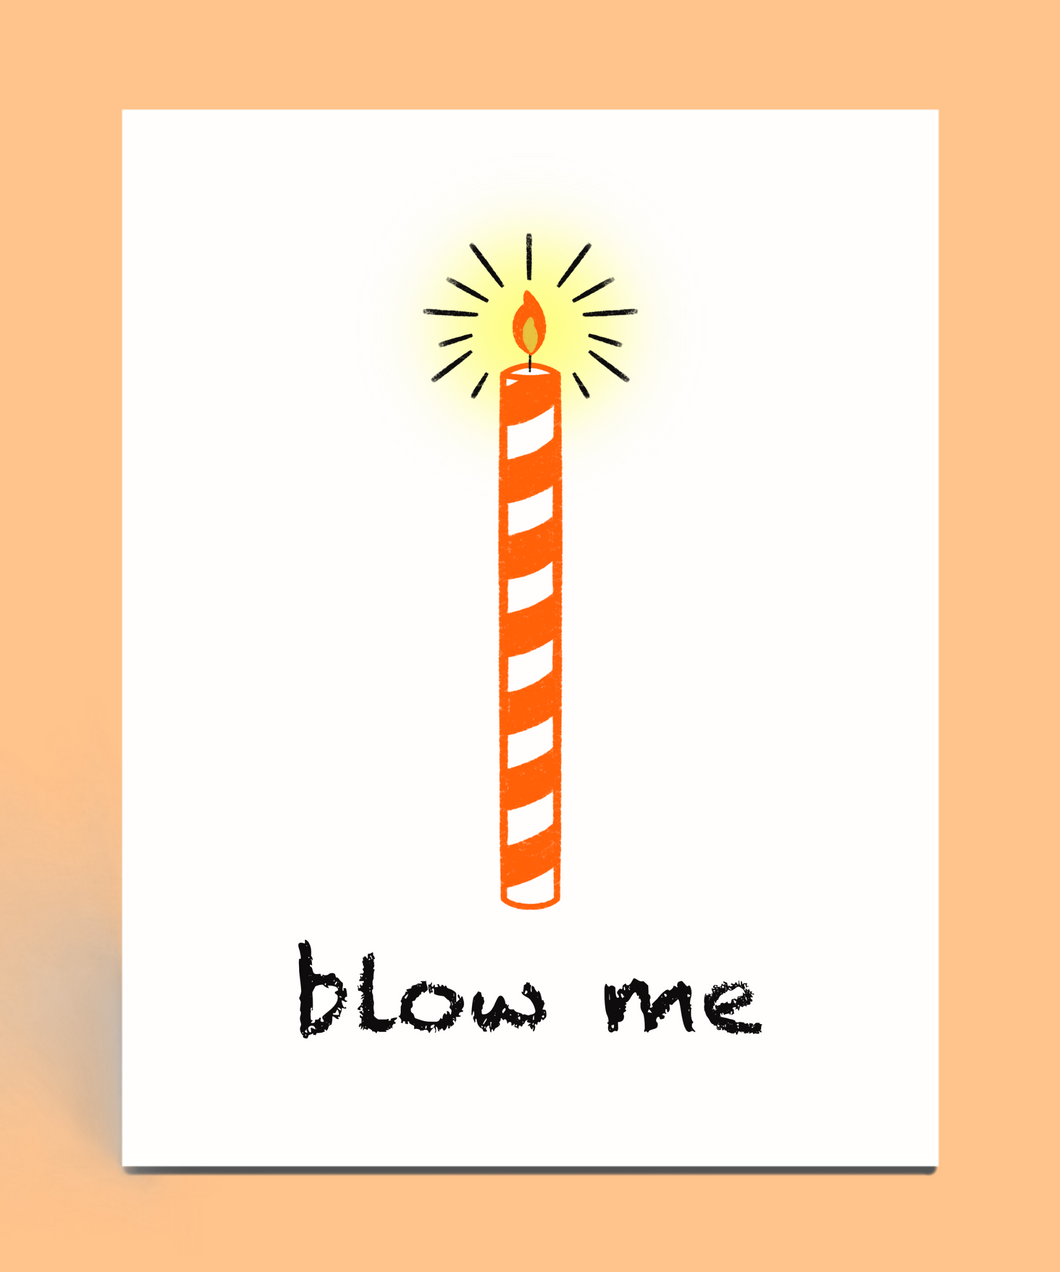 Blow Me Birthday Card